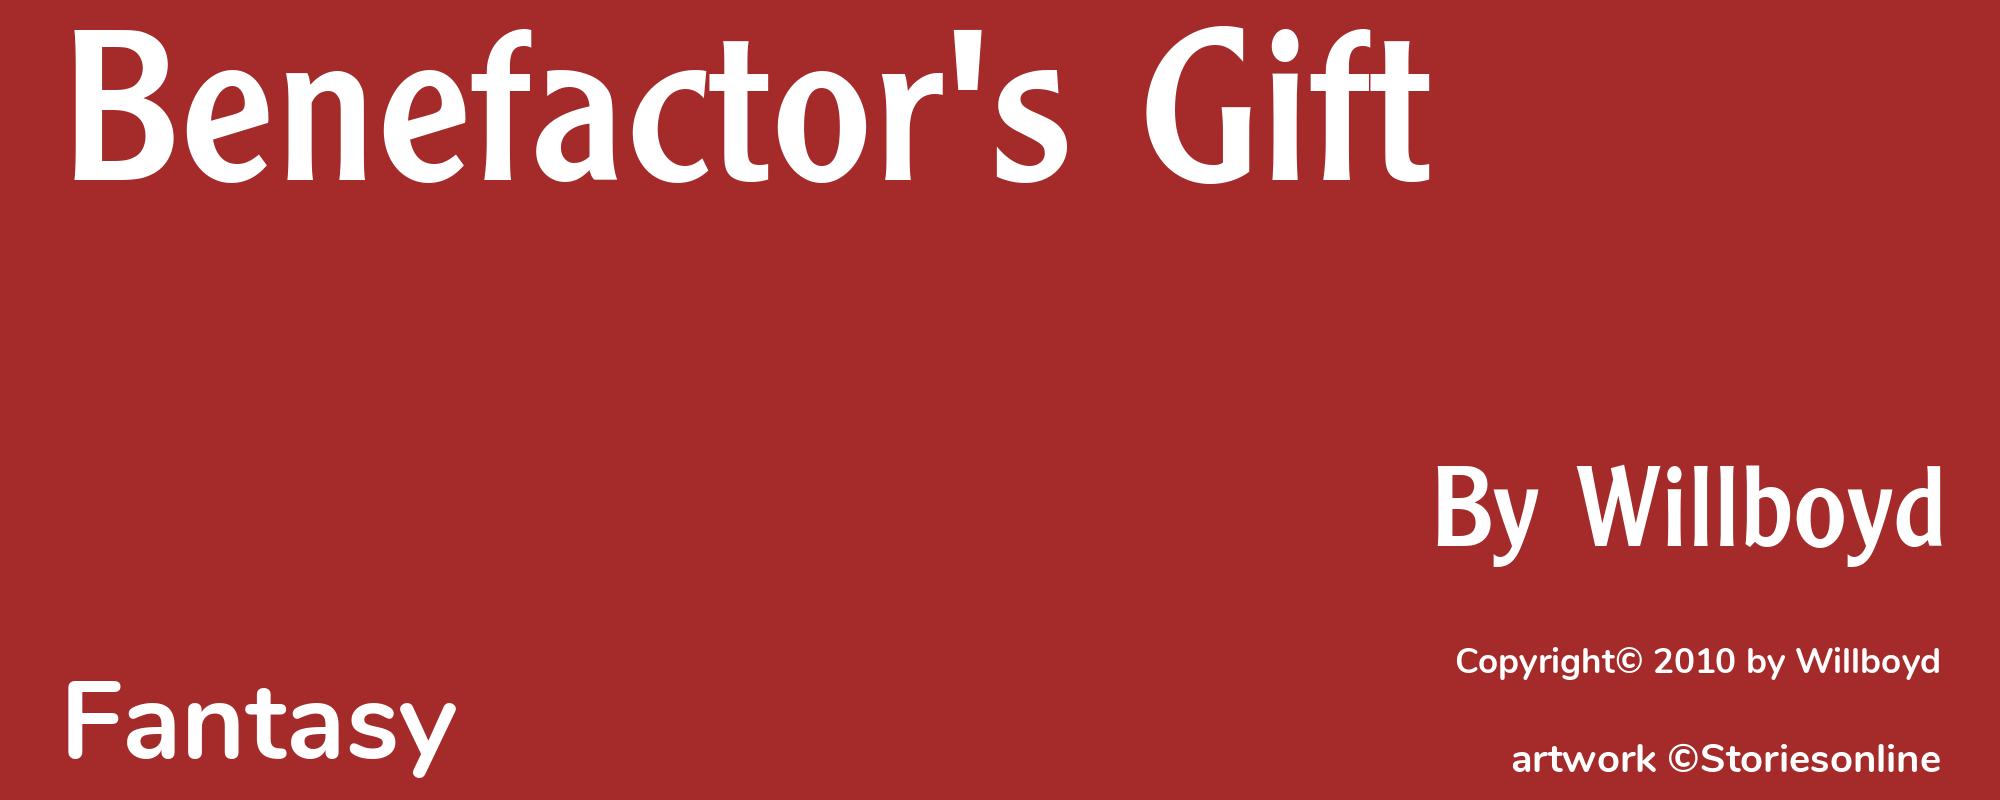 Benefactor's Gift - Cover